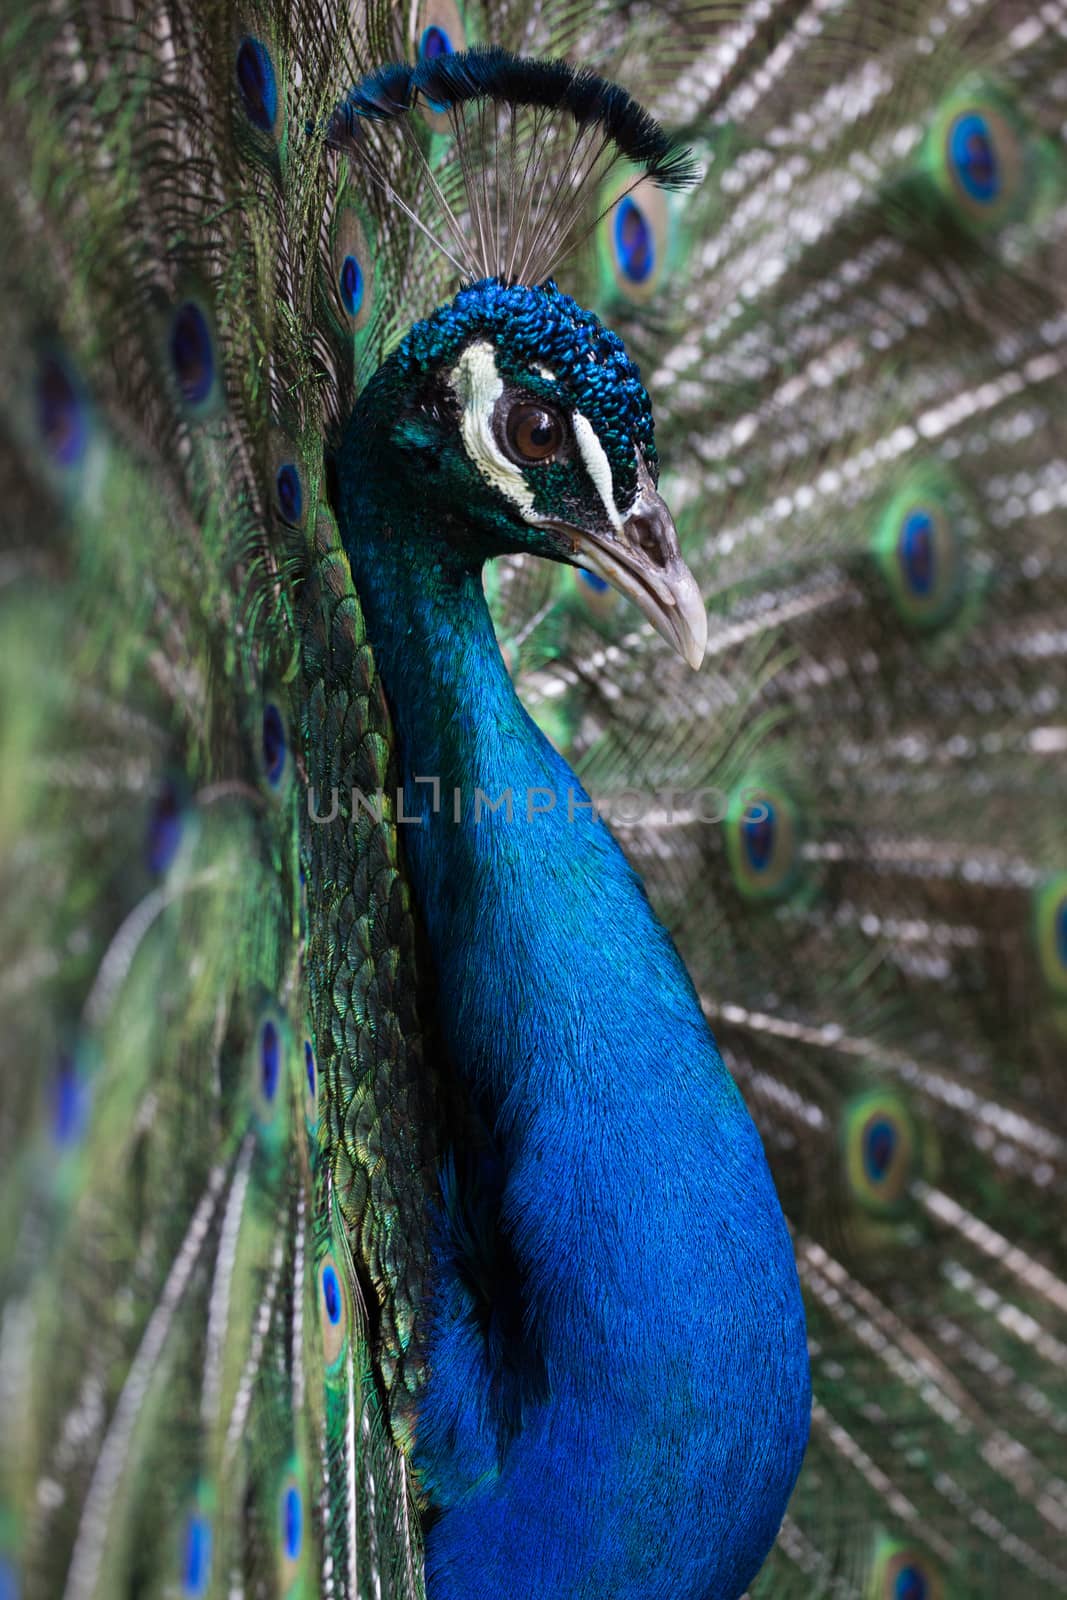 Preening peacock taken in Costa Rica